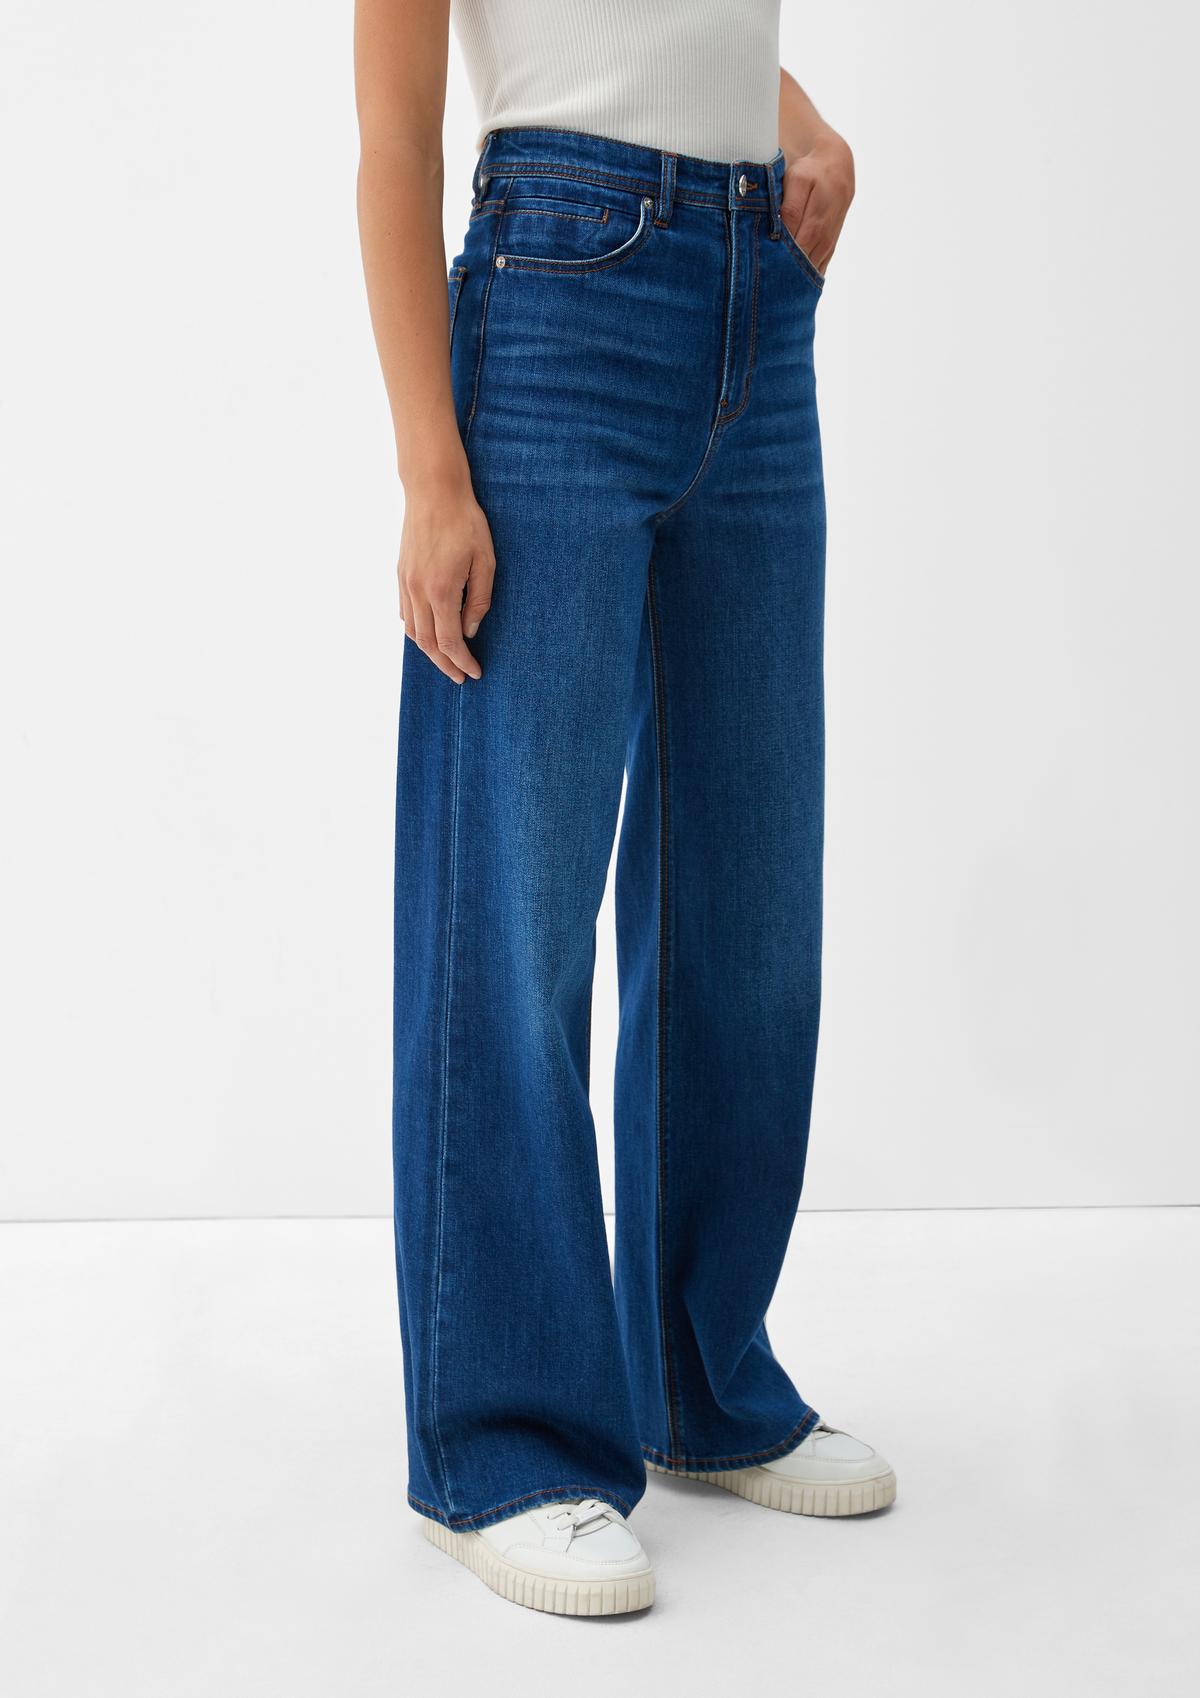 Jeans - Super / Rise Leg Regular Suri High royalblau Wide / Fit /